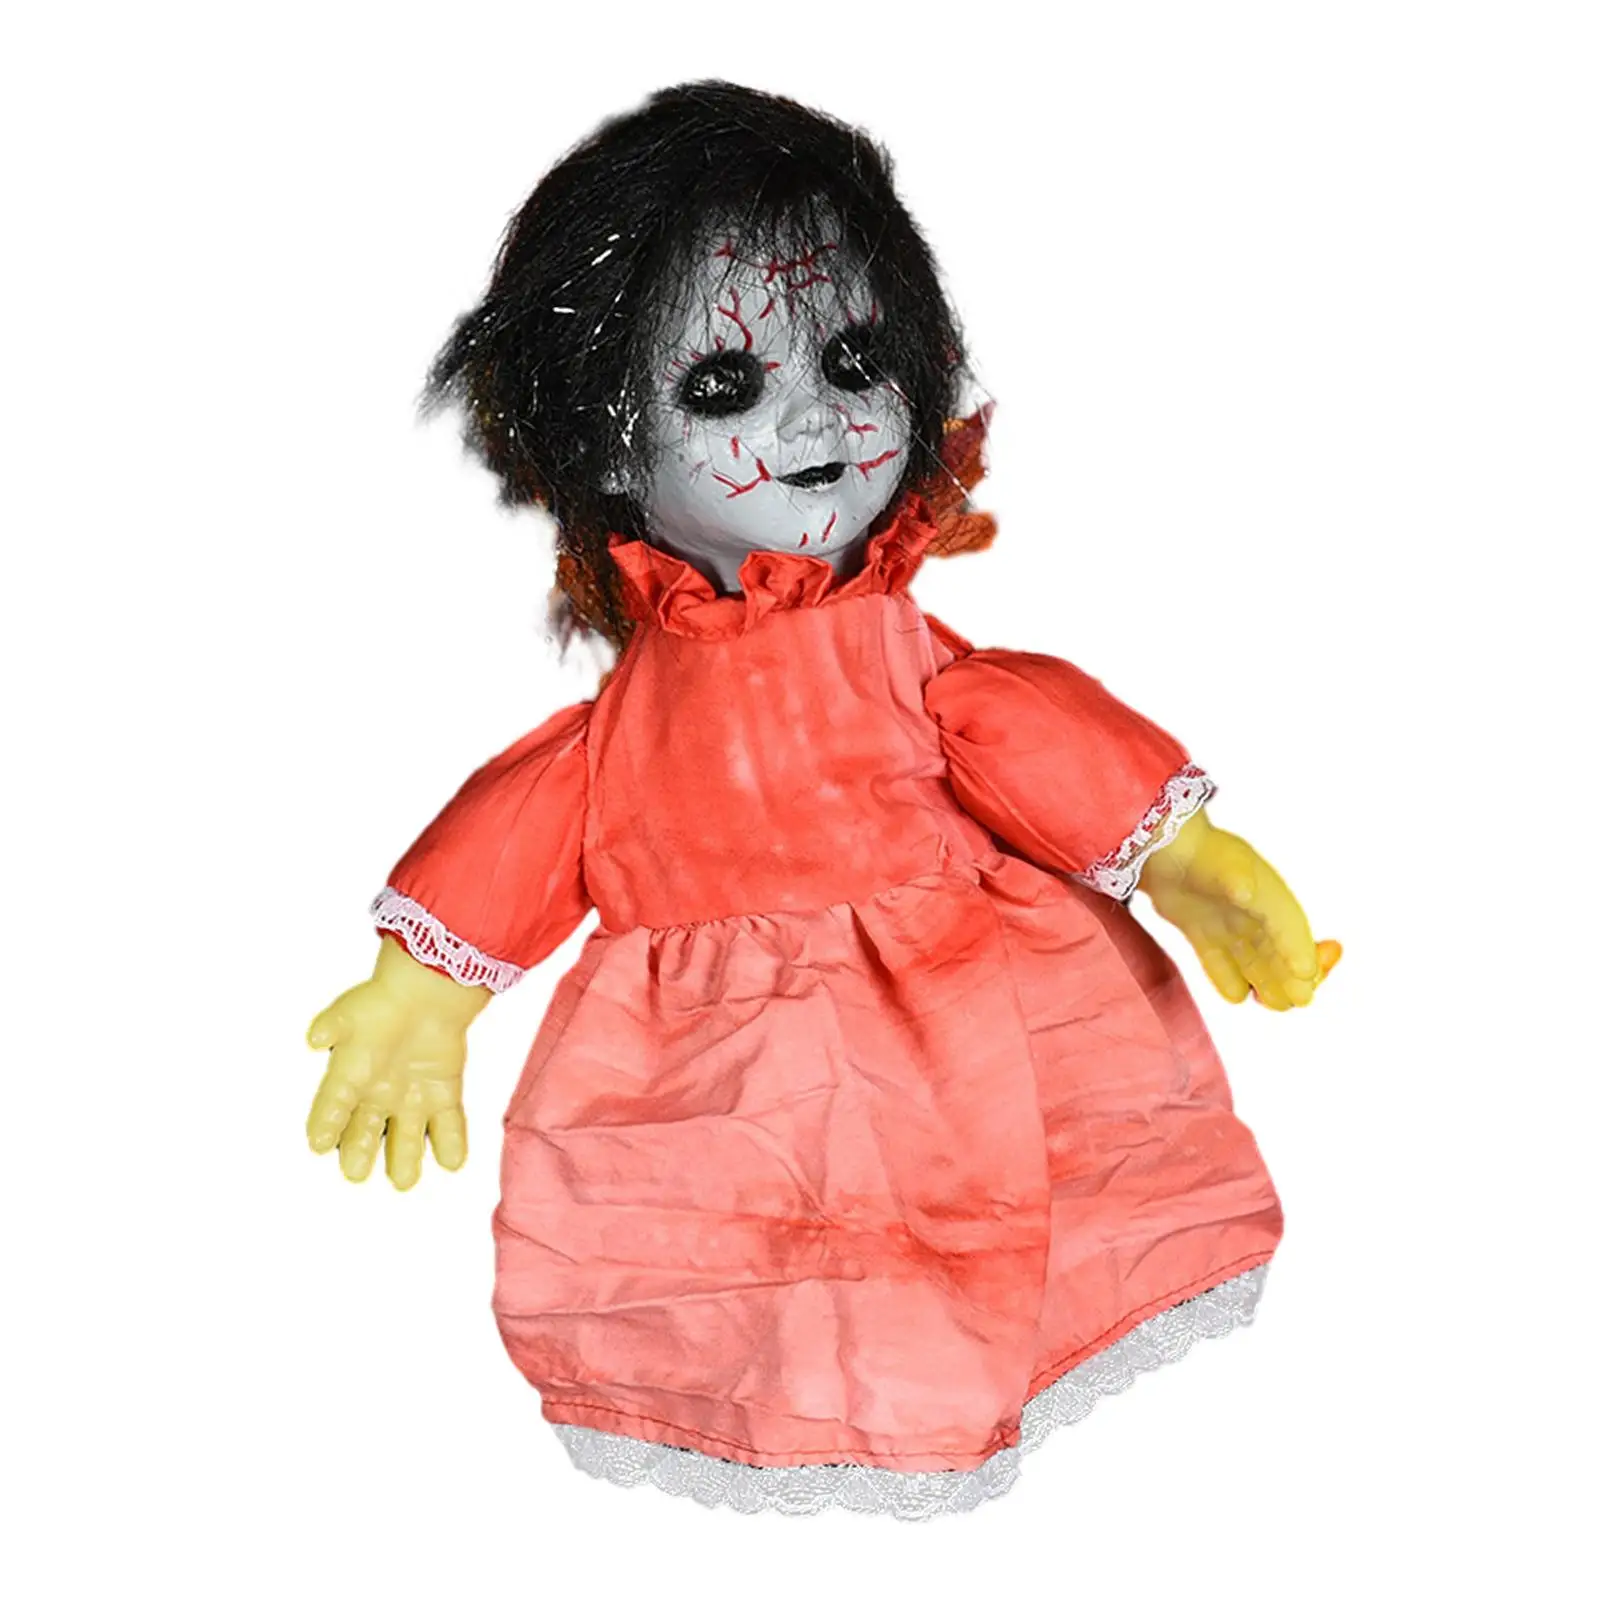 Creepy Halloween Dolls Holiday Decor Terror Decoration Toy Light up Eyes Haunted Doll for Home Indoor Outdoor Halloween Bar